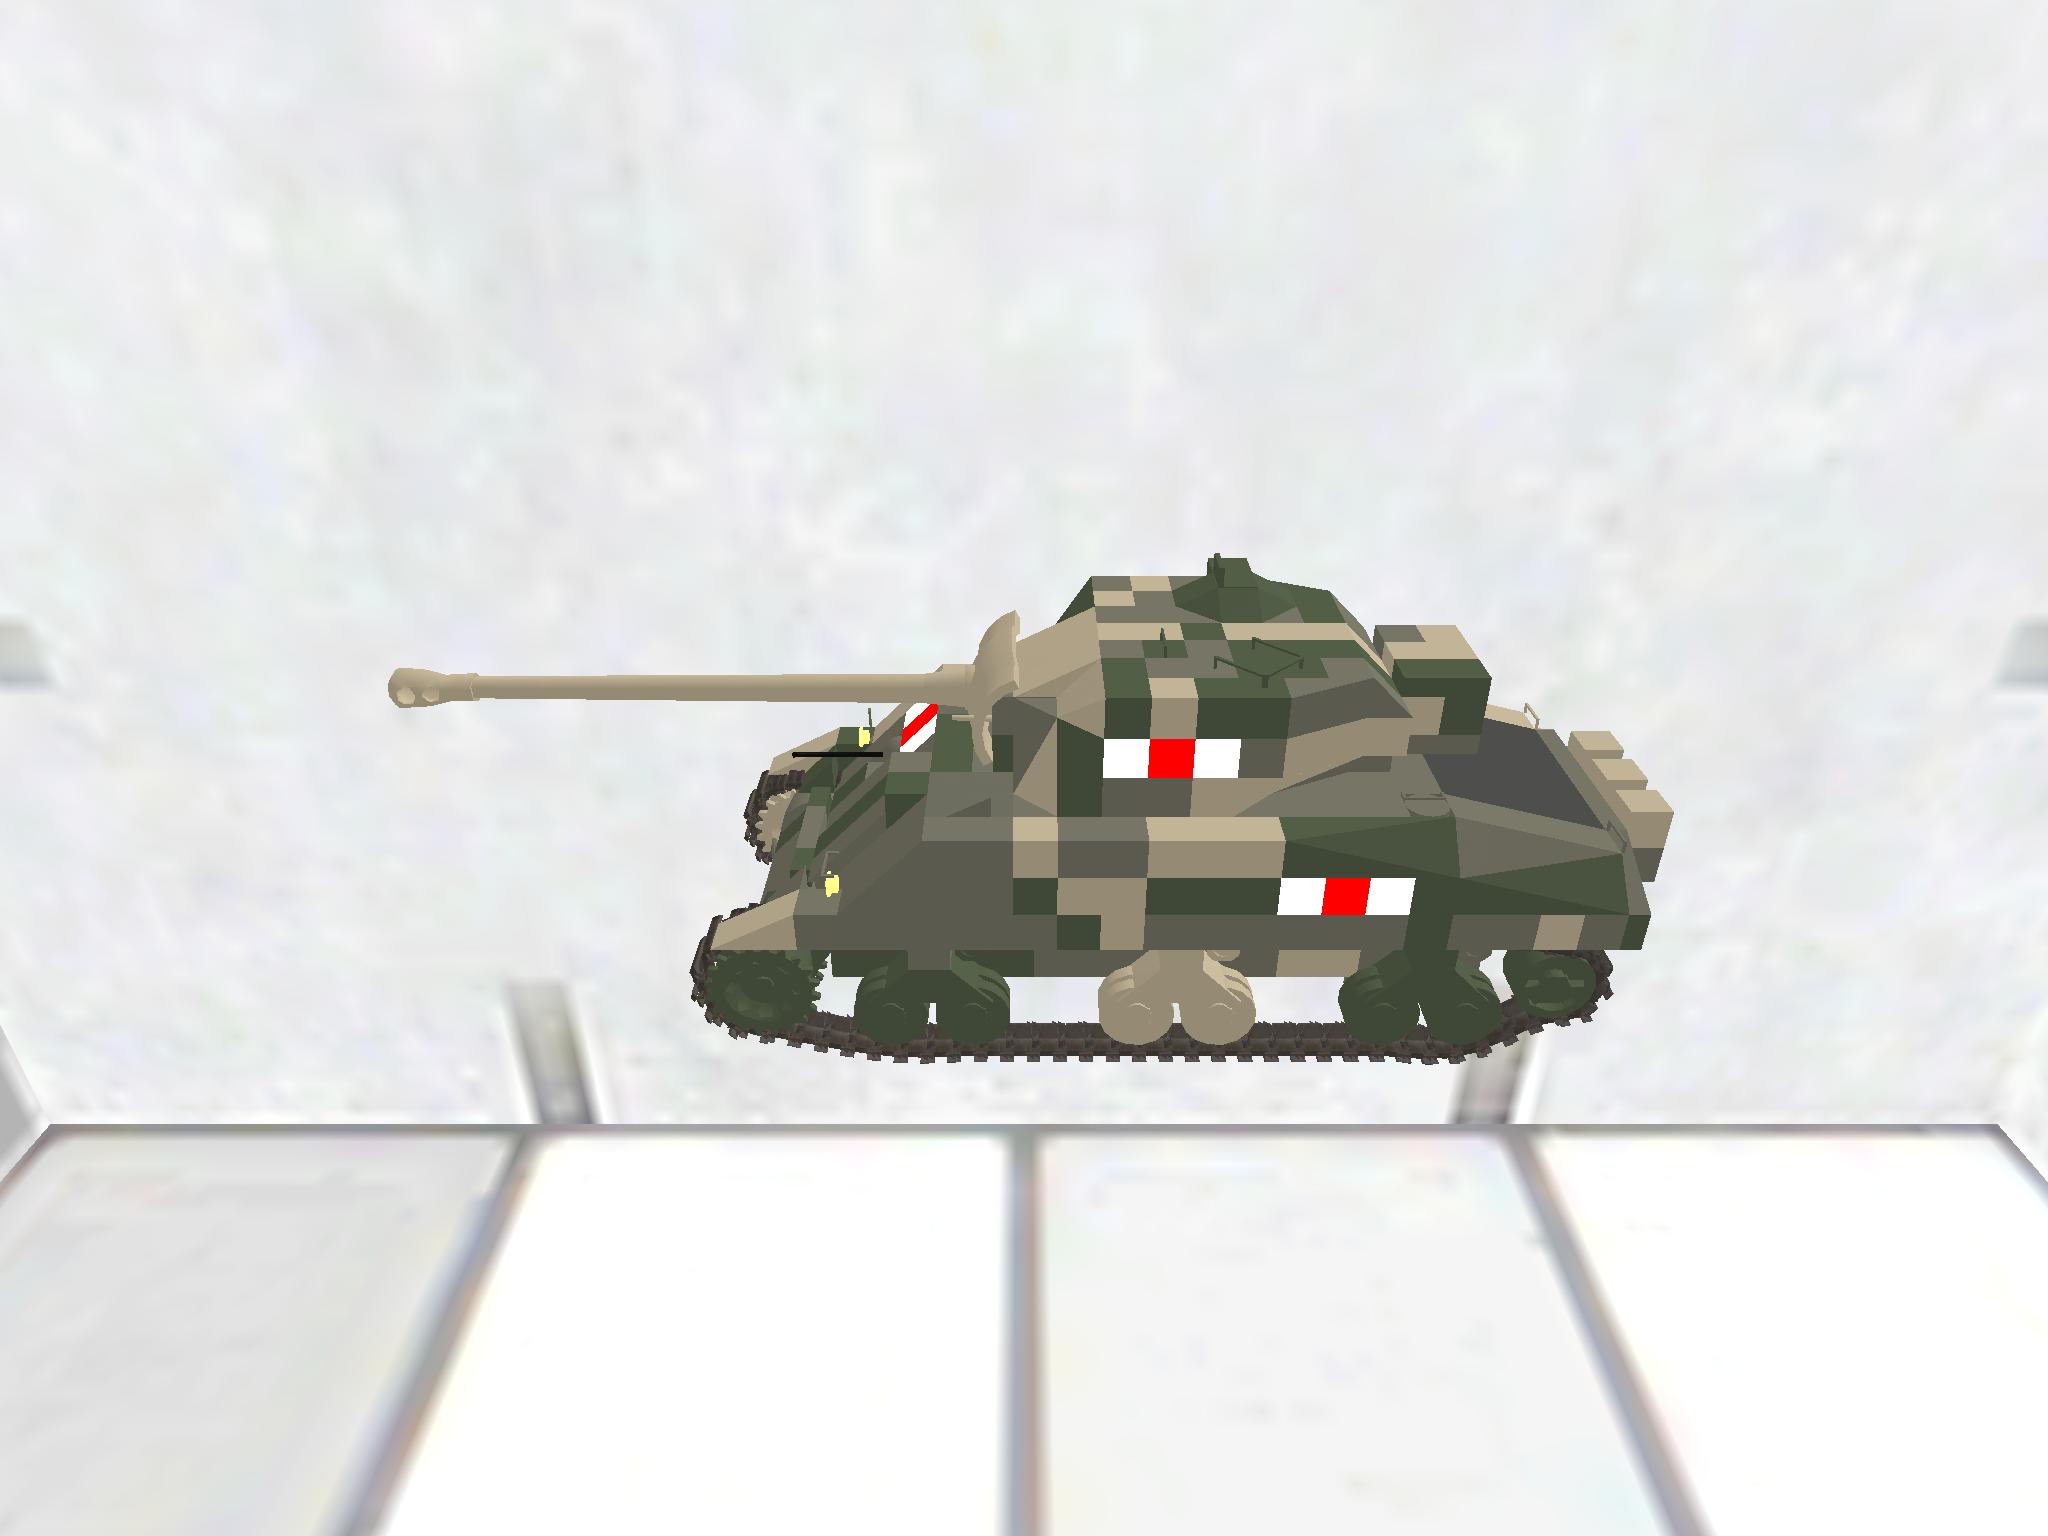 M4 Sherman firefly